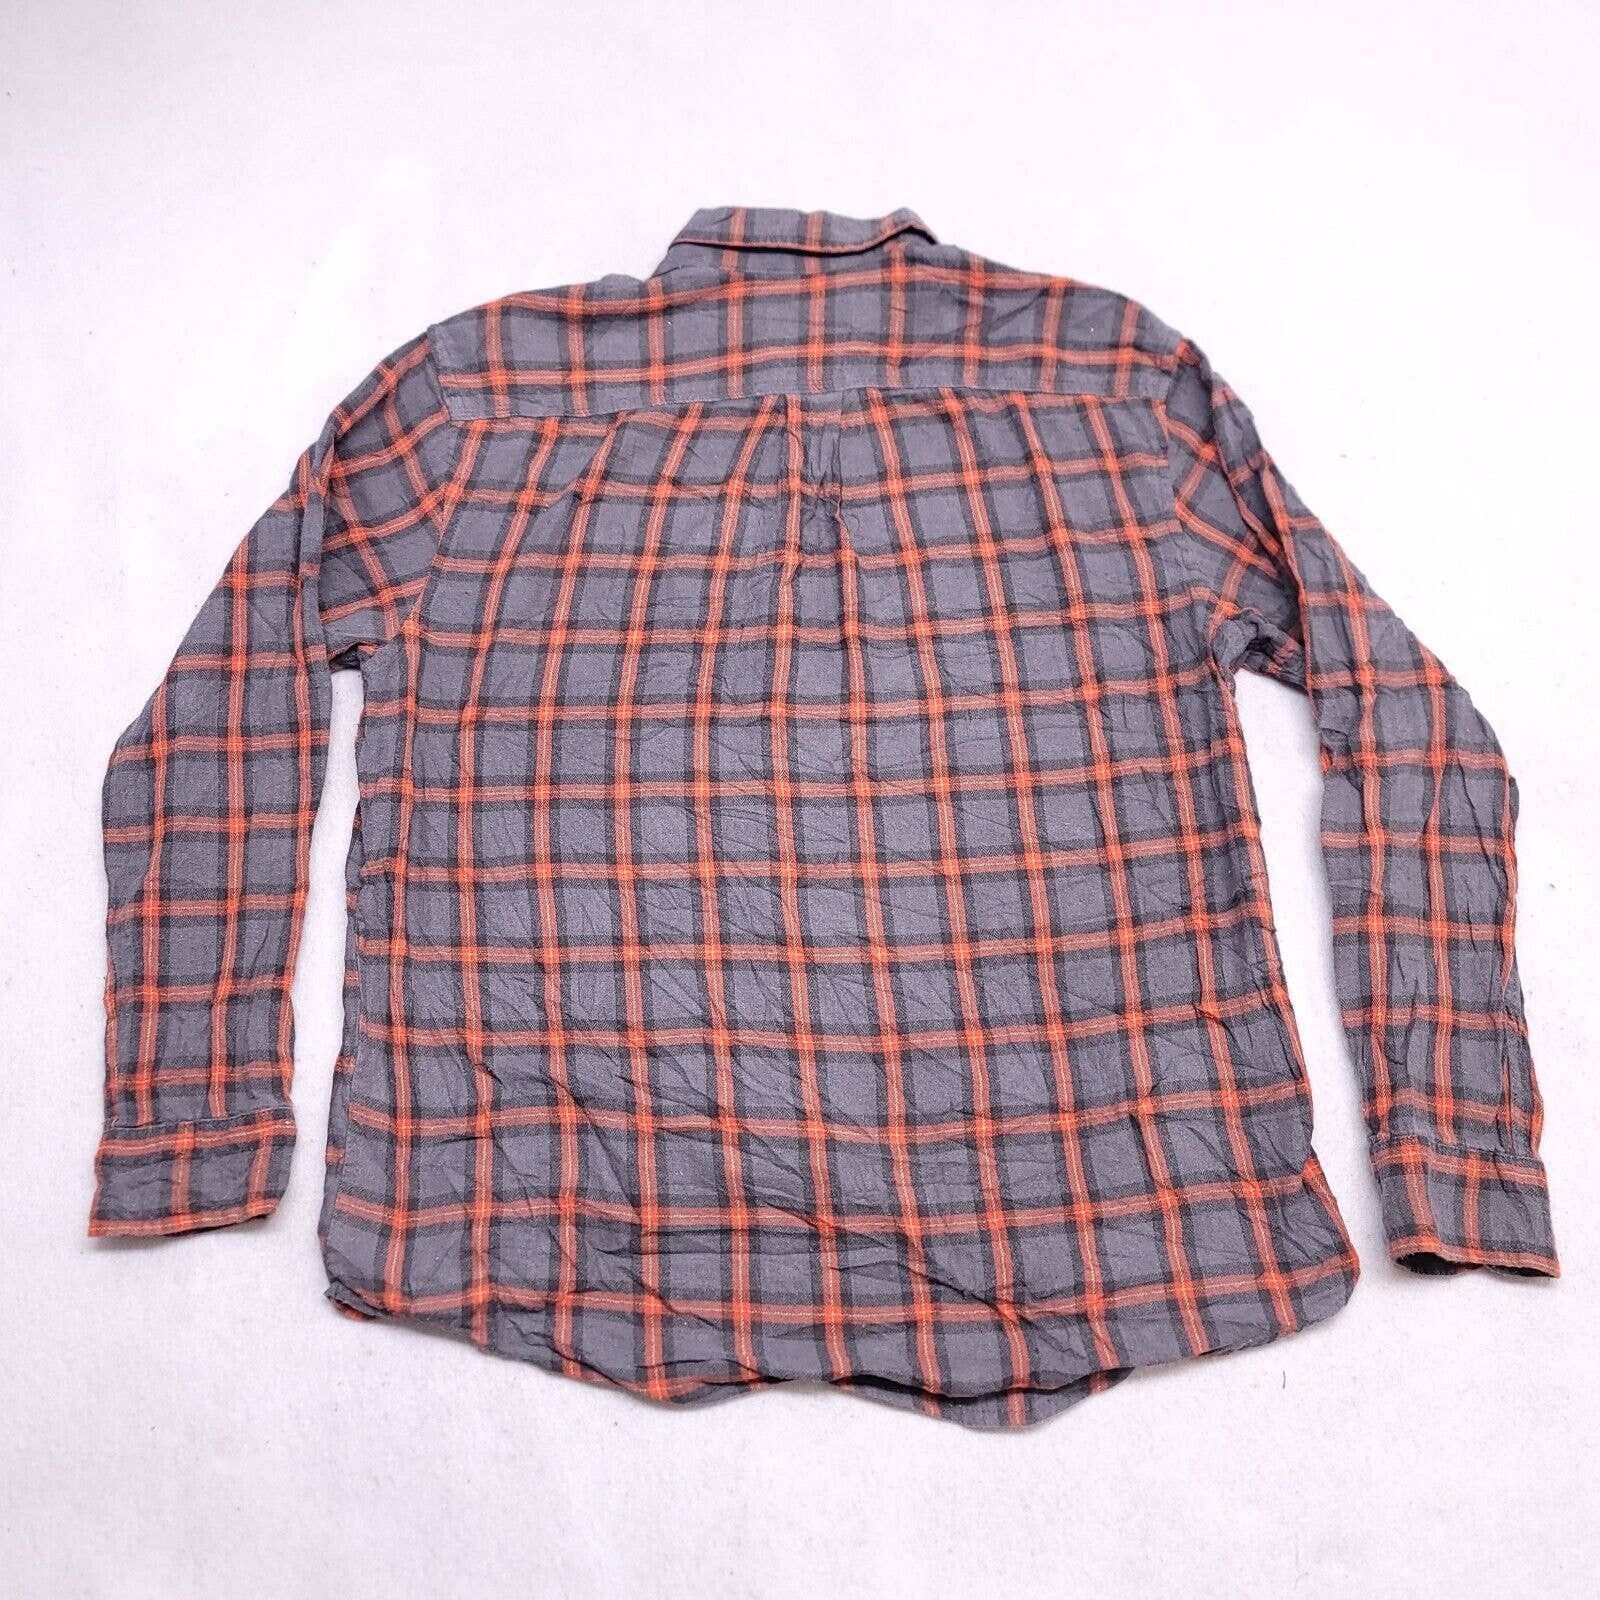 Northwest Territory Northwest Territory Tartan Flannel Shirt Mens Size L Gray Size US L / EU 52-54 / 3 - 10 Preview